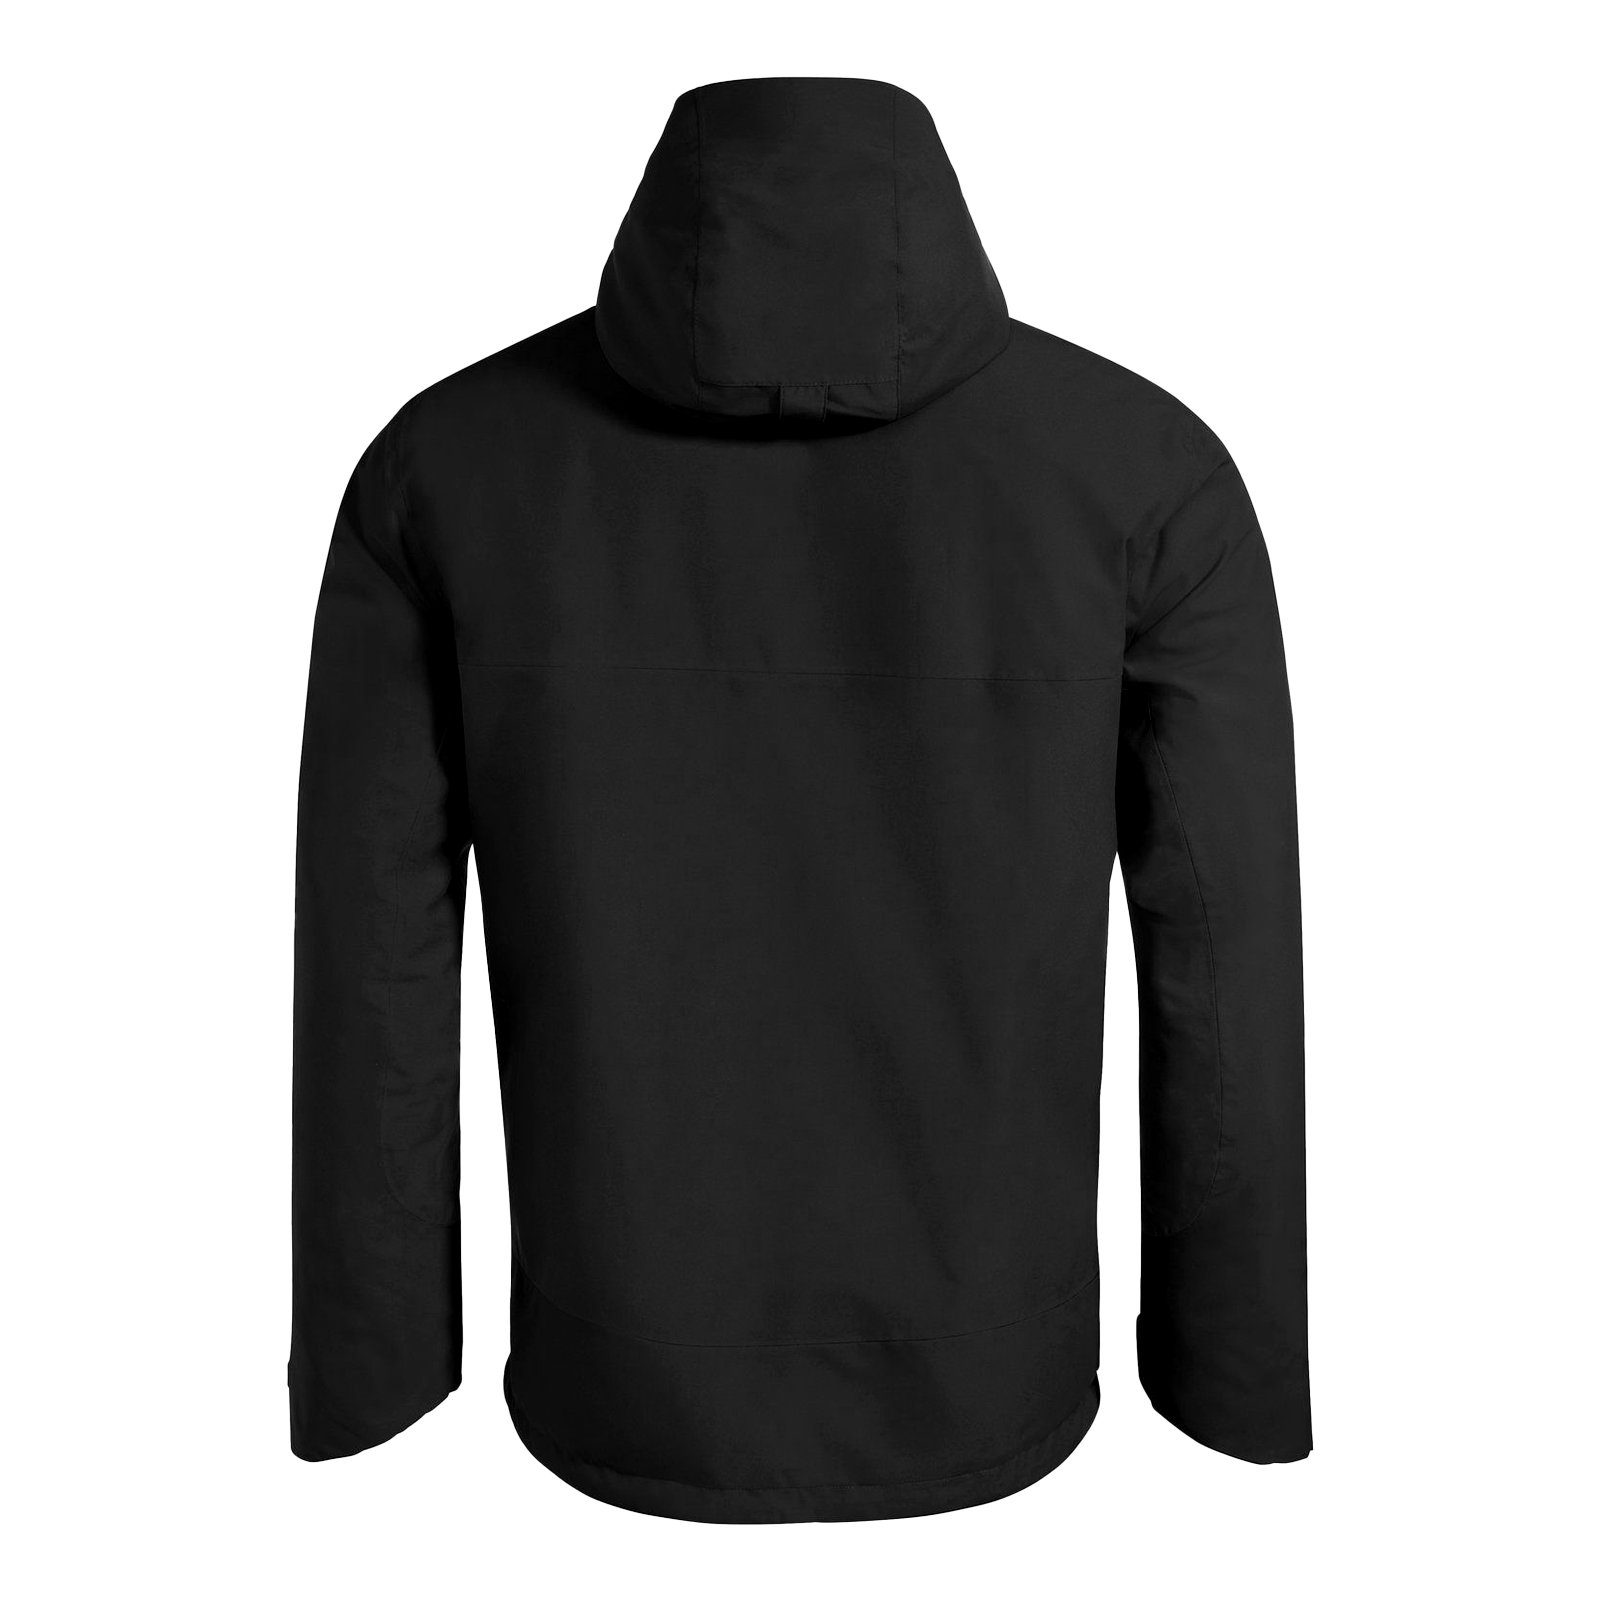 VAUDE Winterjacke Jacket Padded verstellbarer black Rosemoor Kapuze mit